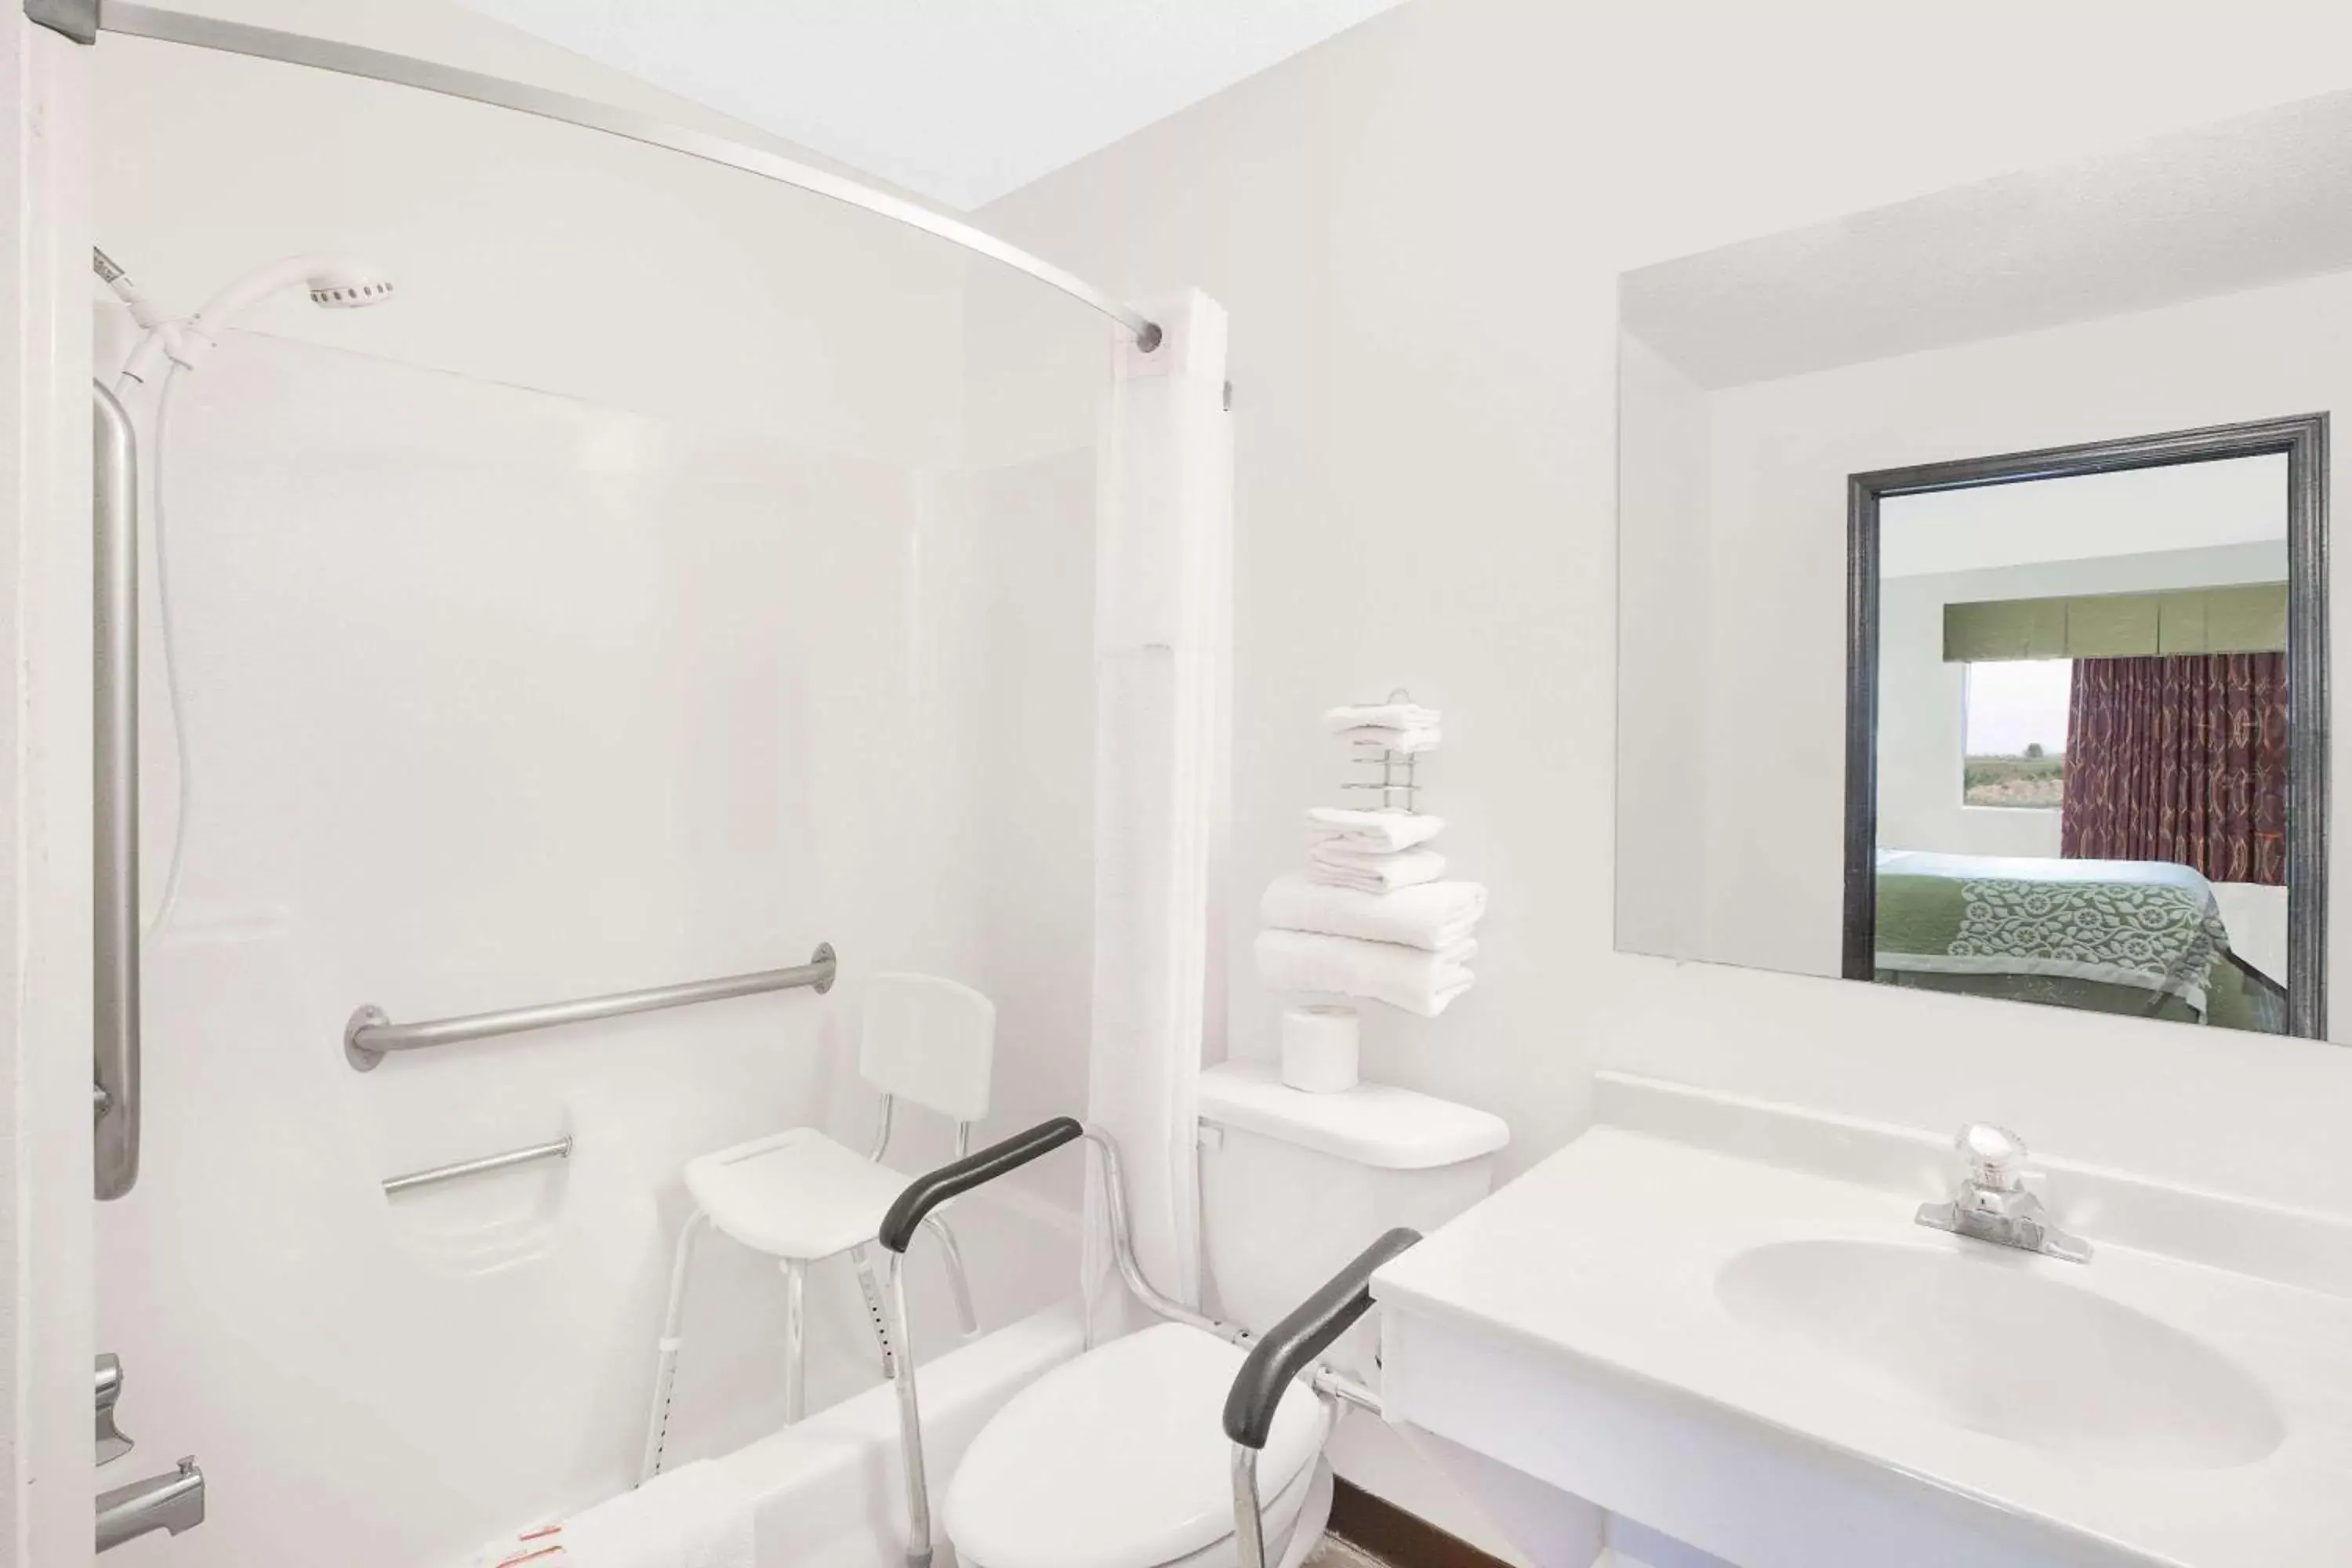 Photo of the whole room, Bathroom in Days Inn by Wyndham York